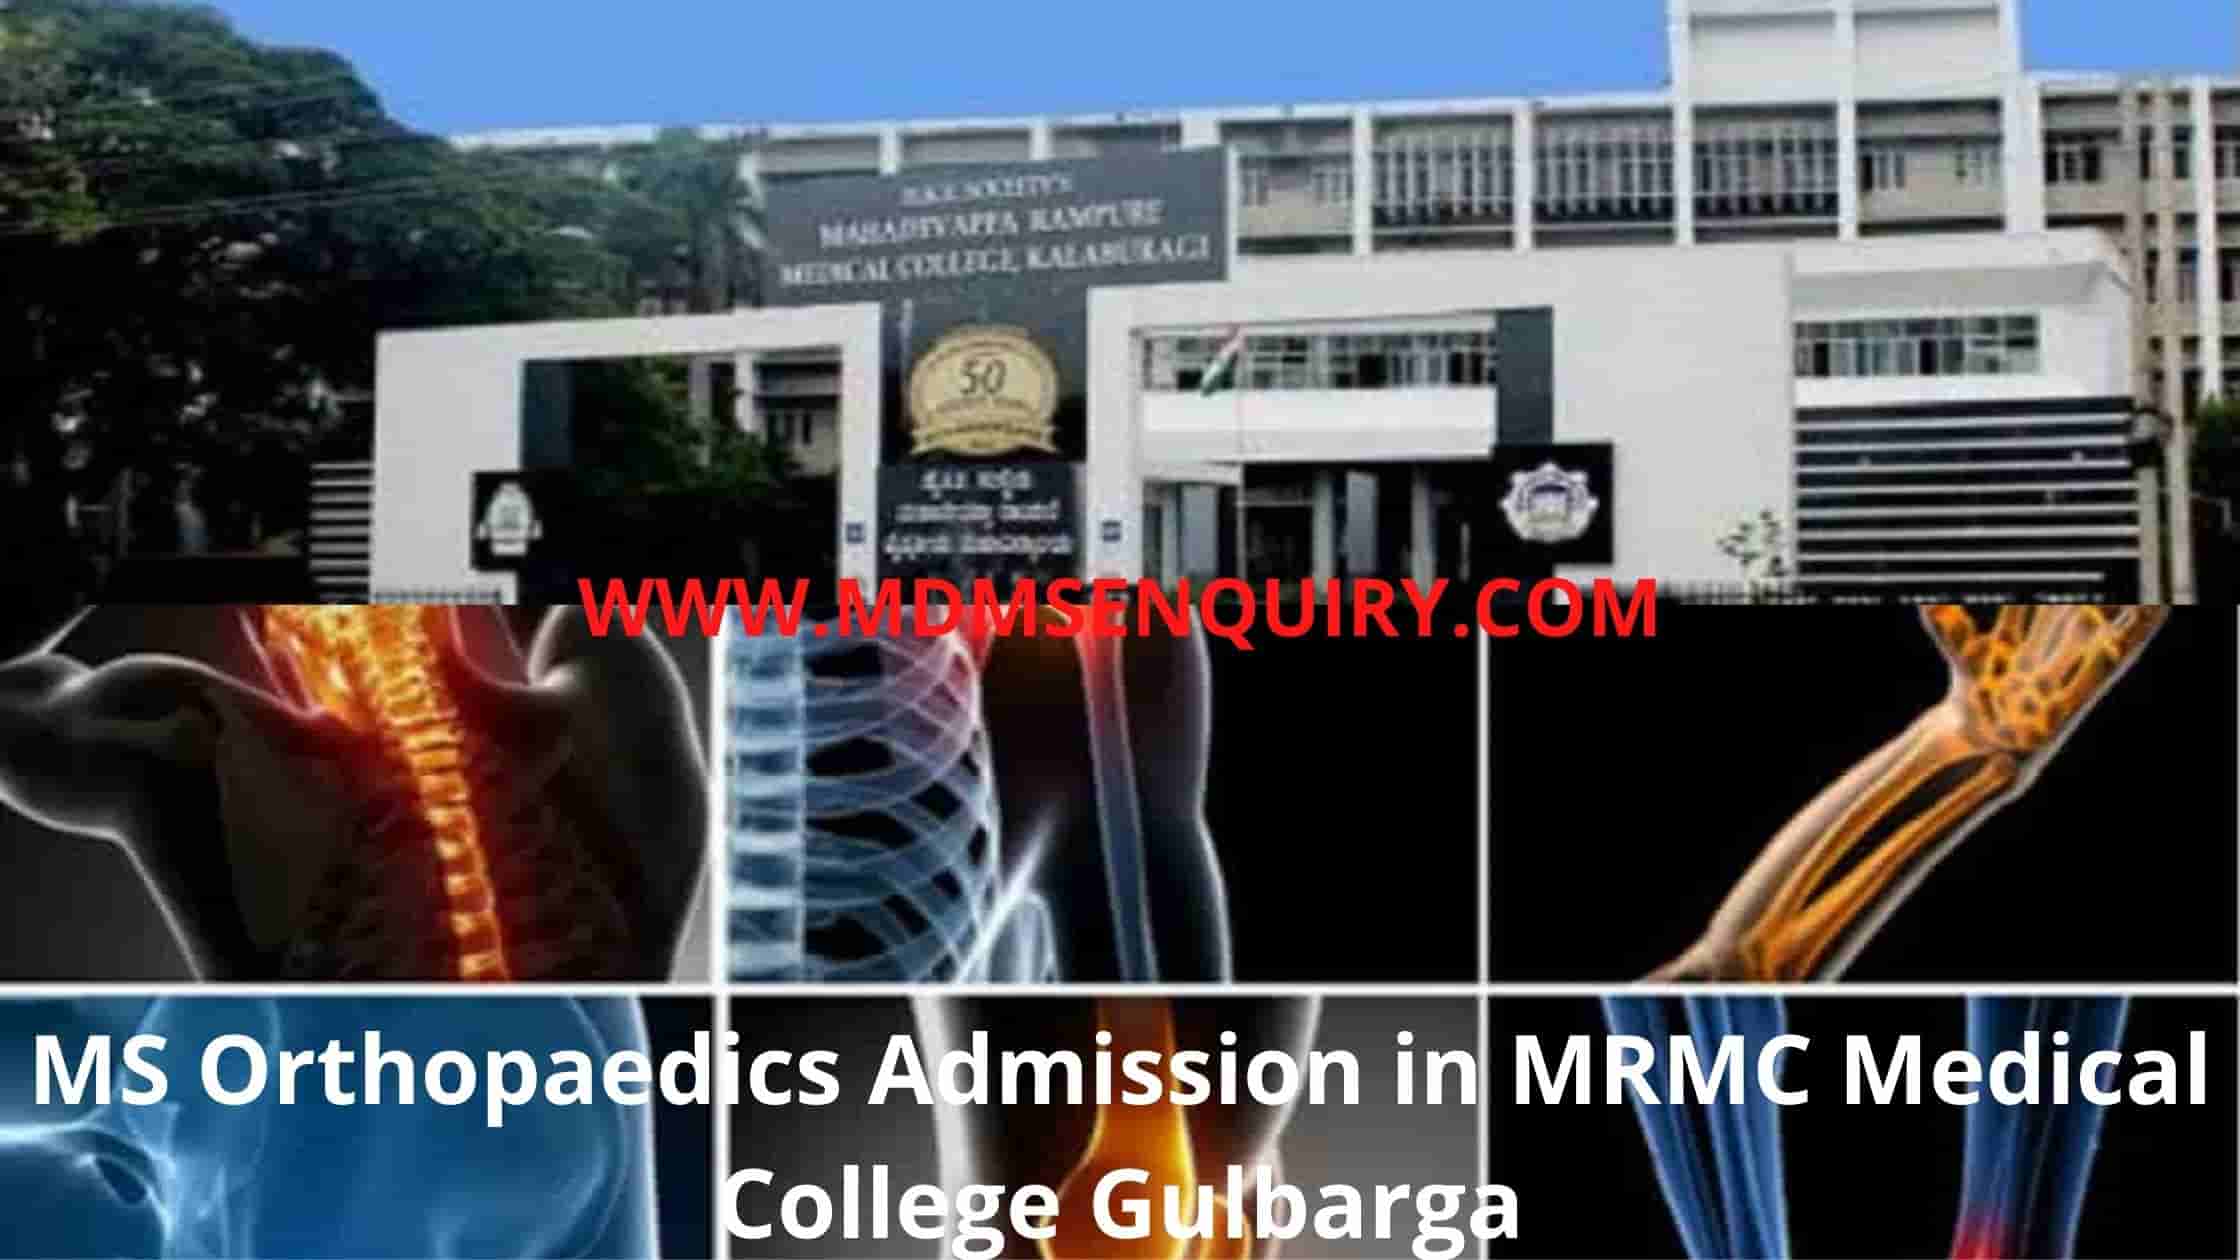 MS Orthopaedics Admission in MRMC Medical College Gulbarga